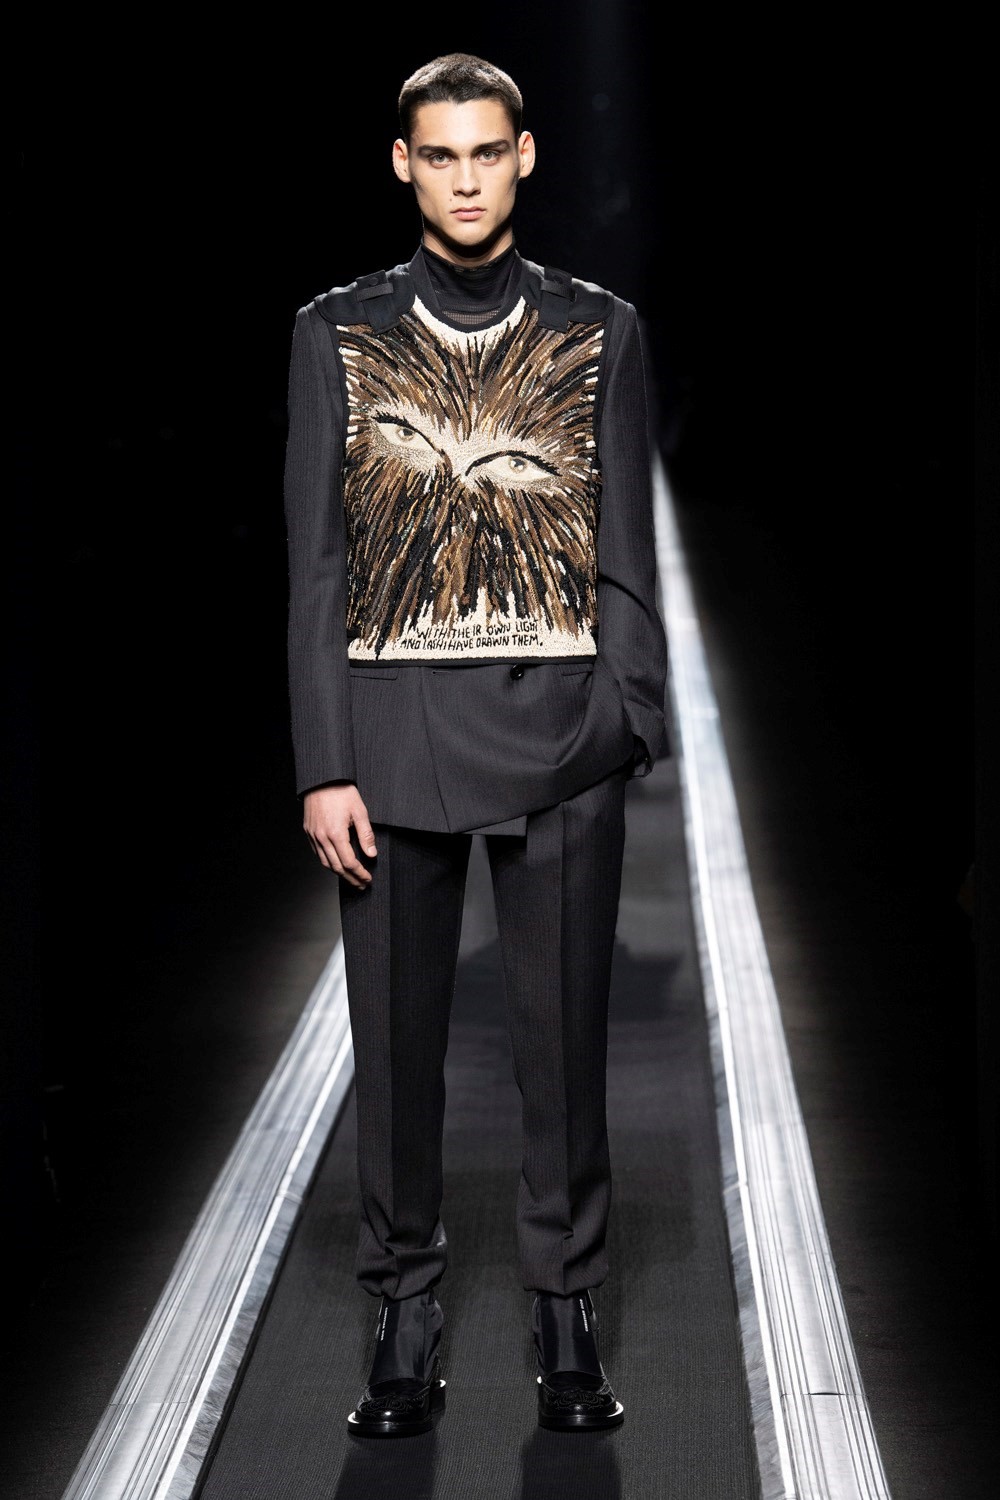 Steve Lacy for Louis Vuitton  Fashion, Menswear, Fashion show